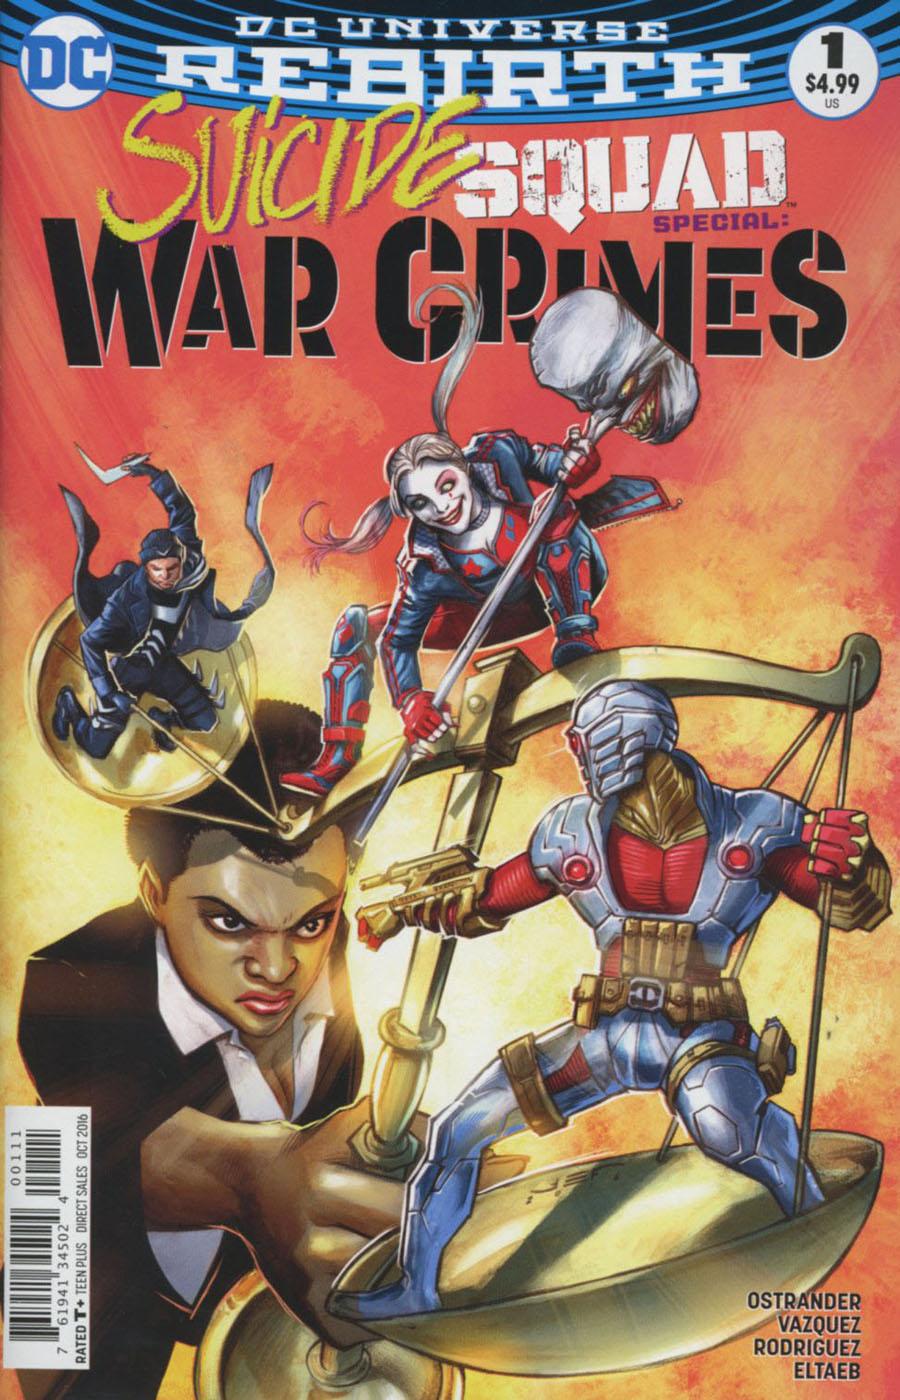 Suicide Squad War Crimes Special Vol. 1 #1